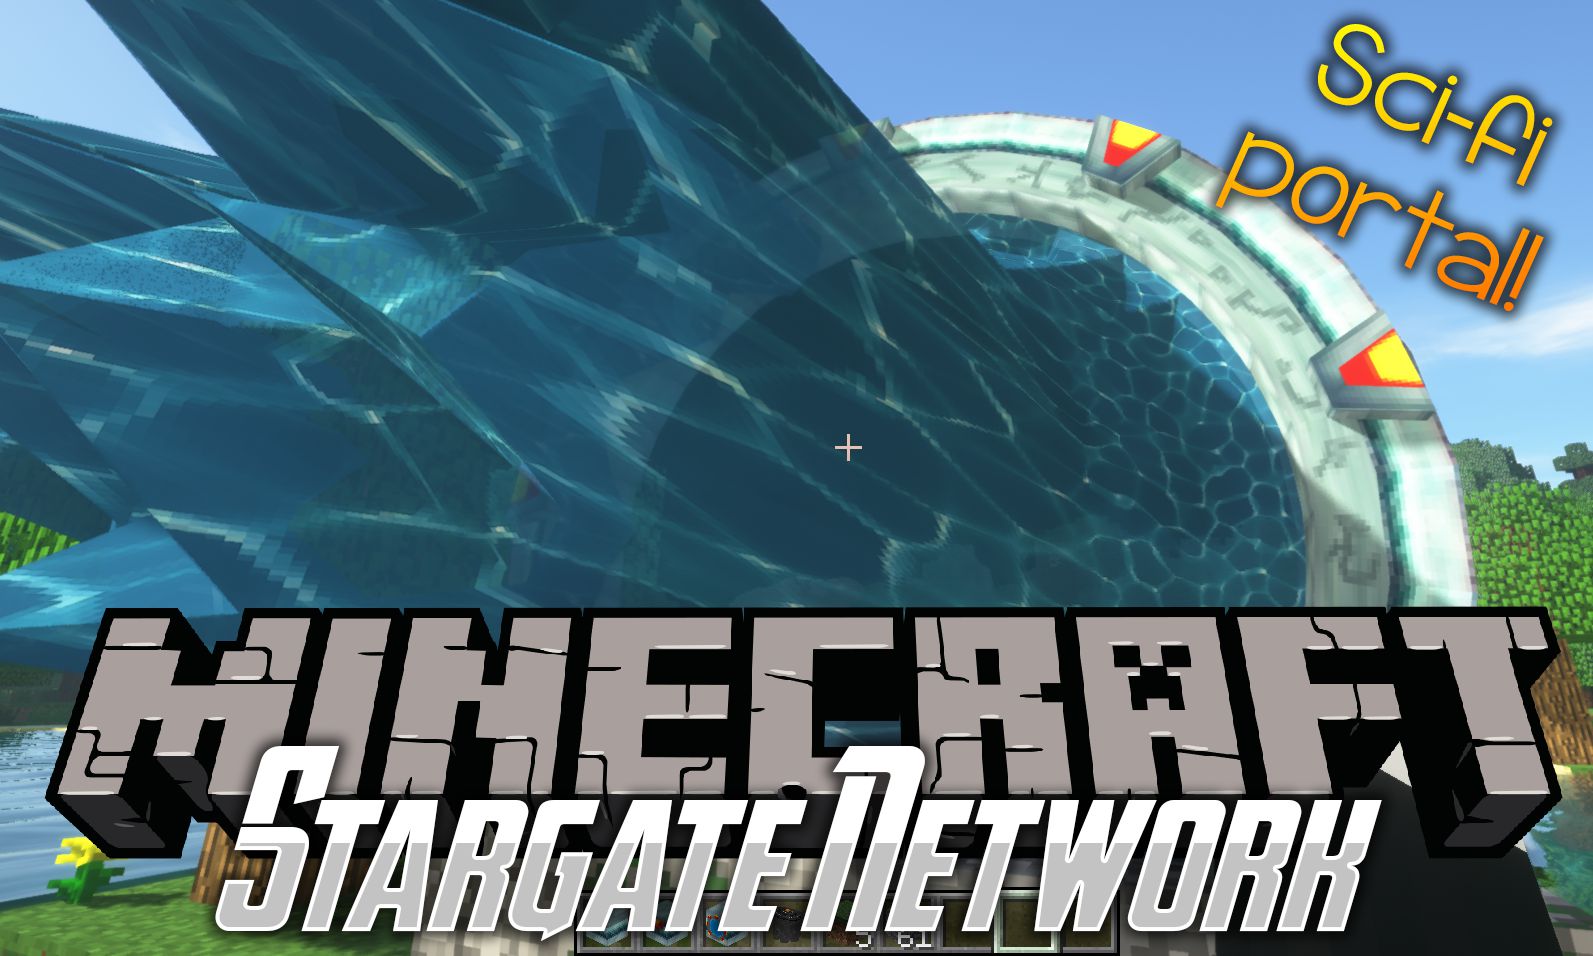 Stargate Network mod for minecraft logo